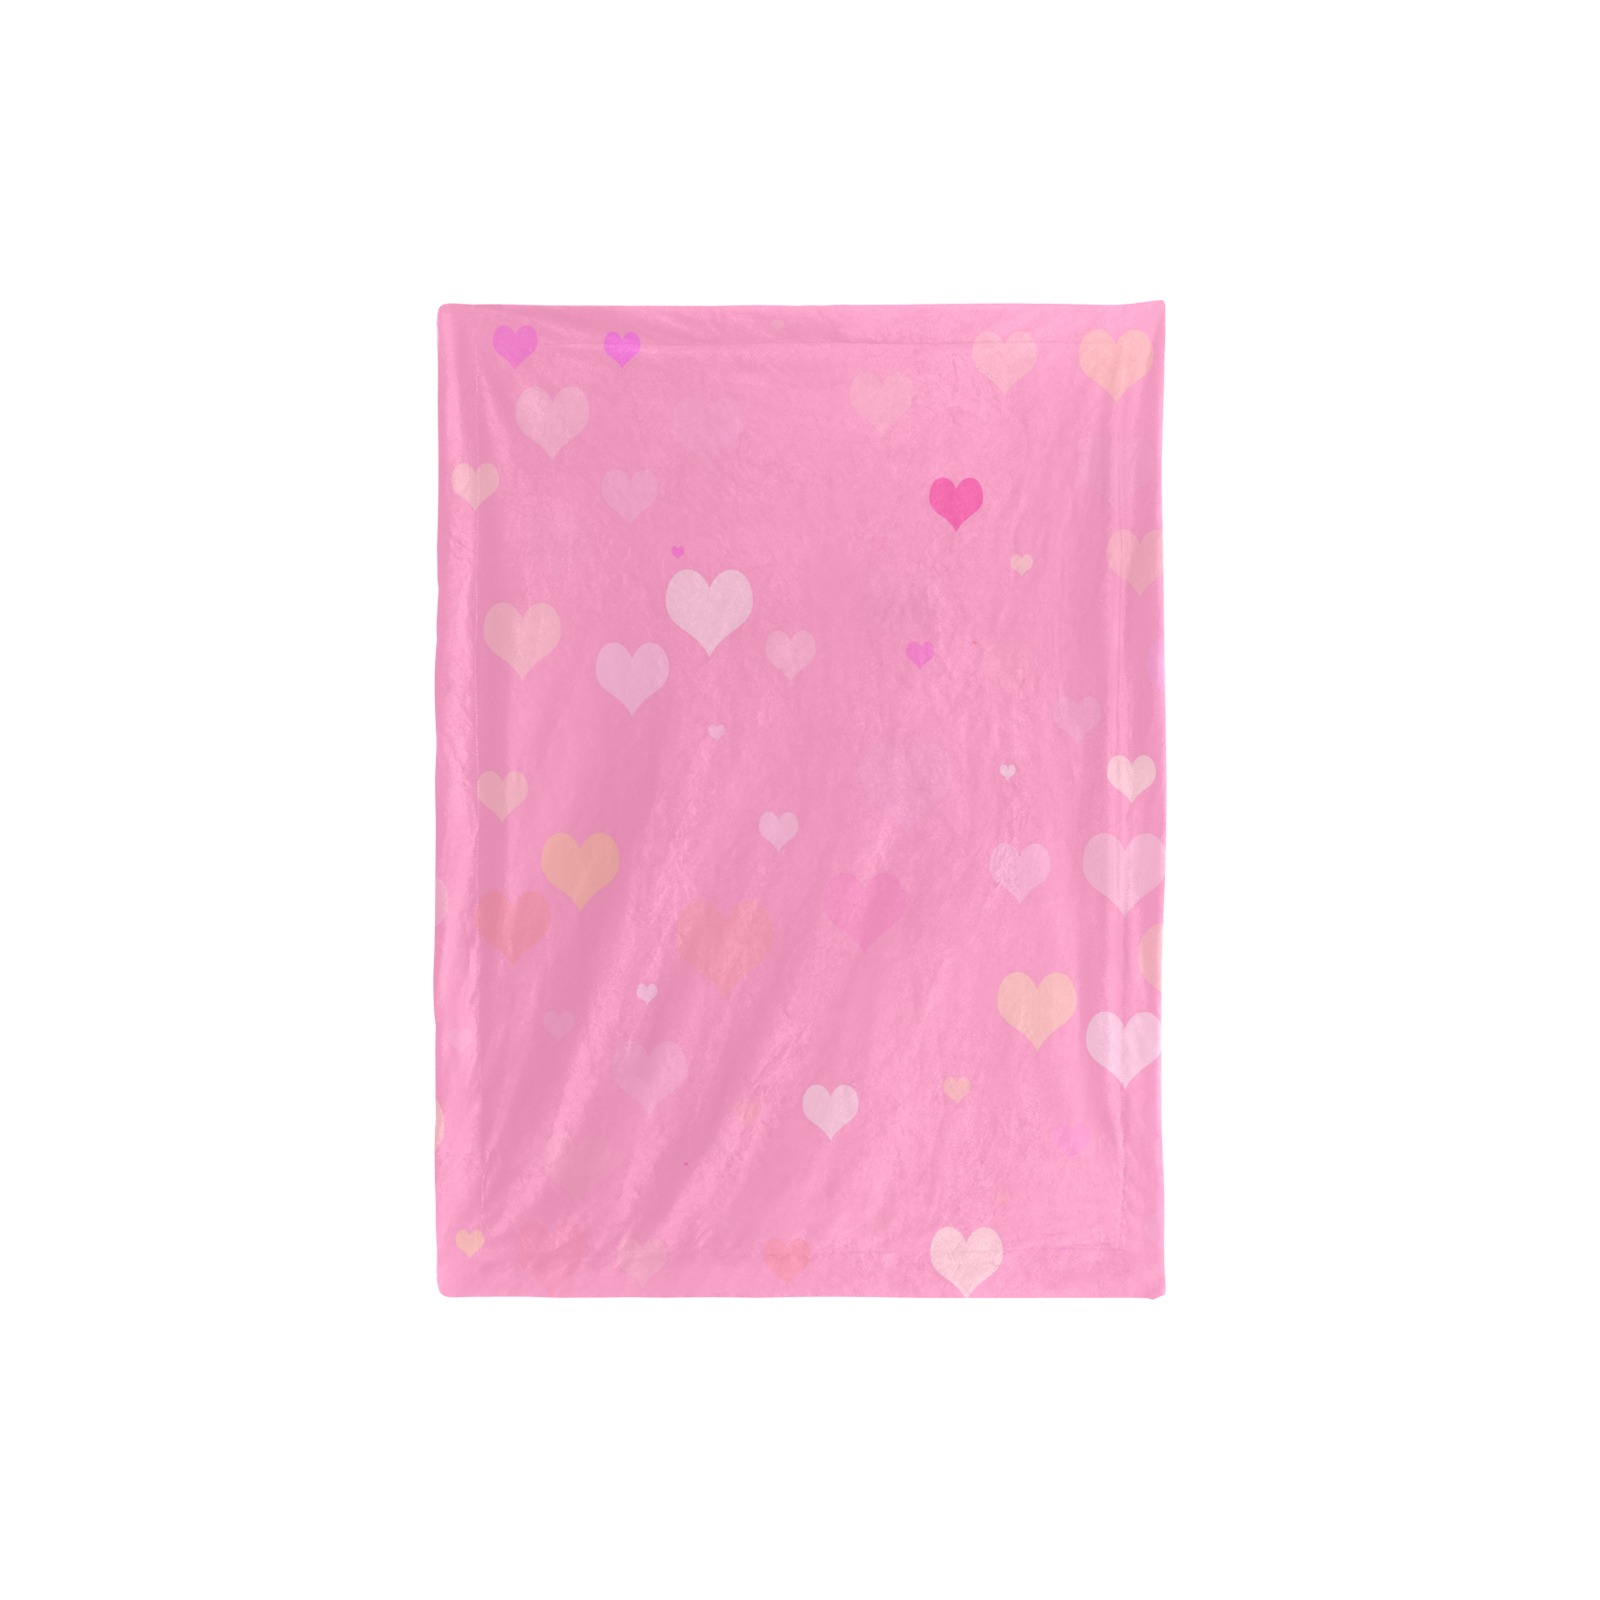 PinkHearts Baby Blanket 30"x40"